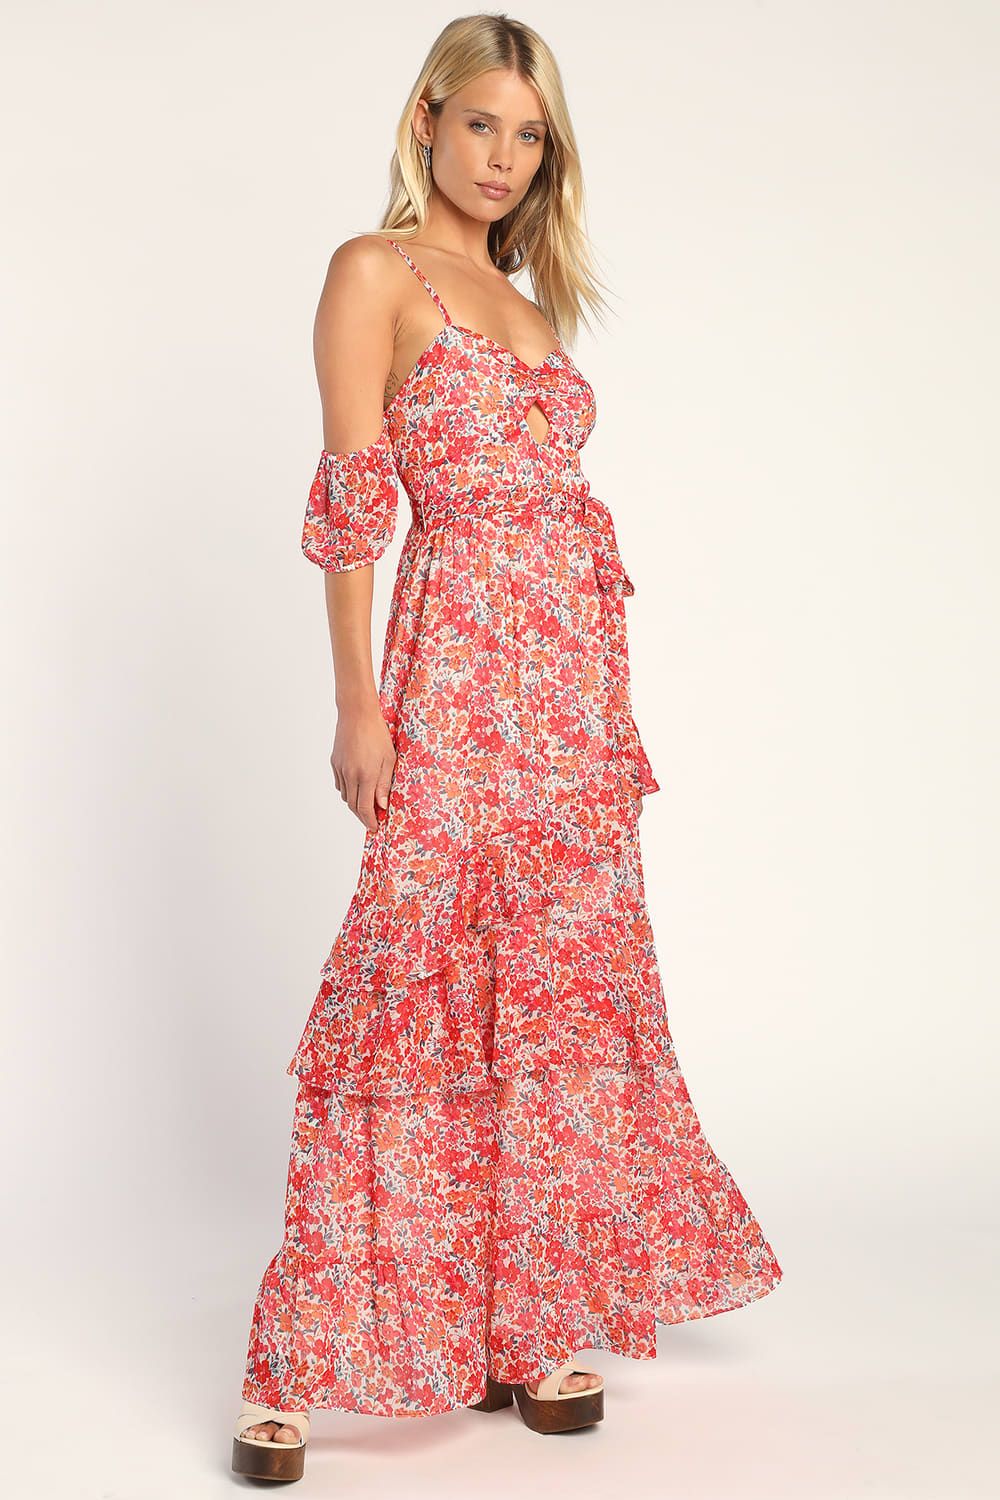 Posh Petals Red Floral Print Lurex Cold-Shoulder Maxi Dress | Lulus (US)